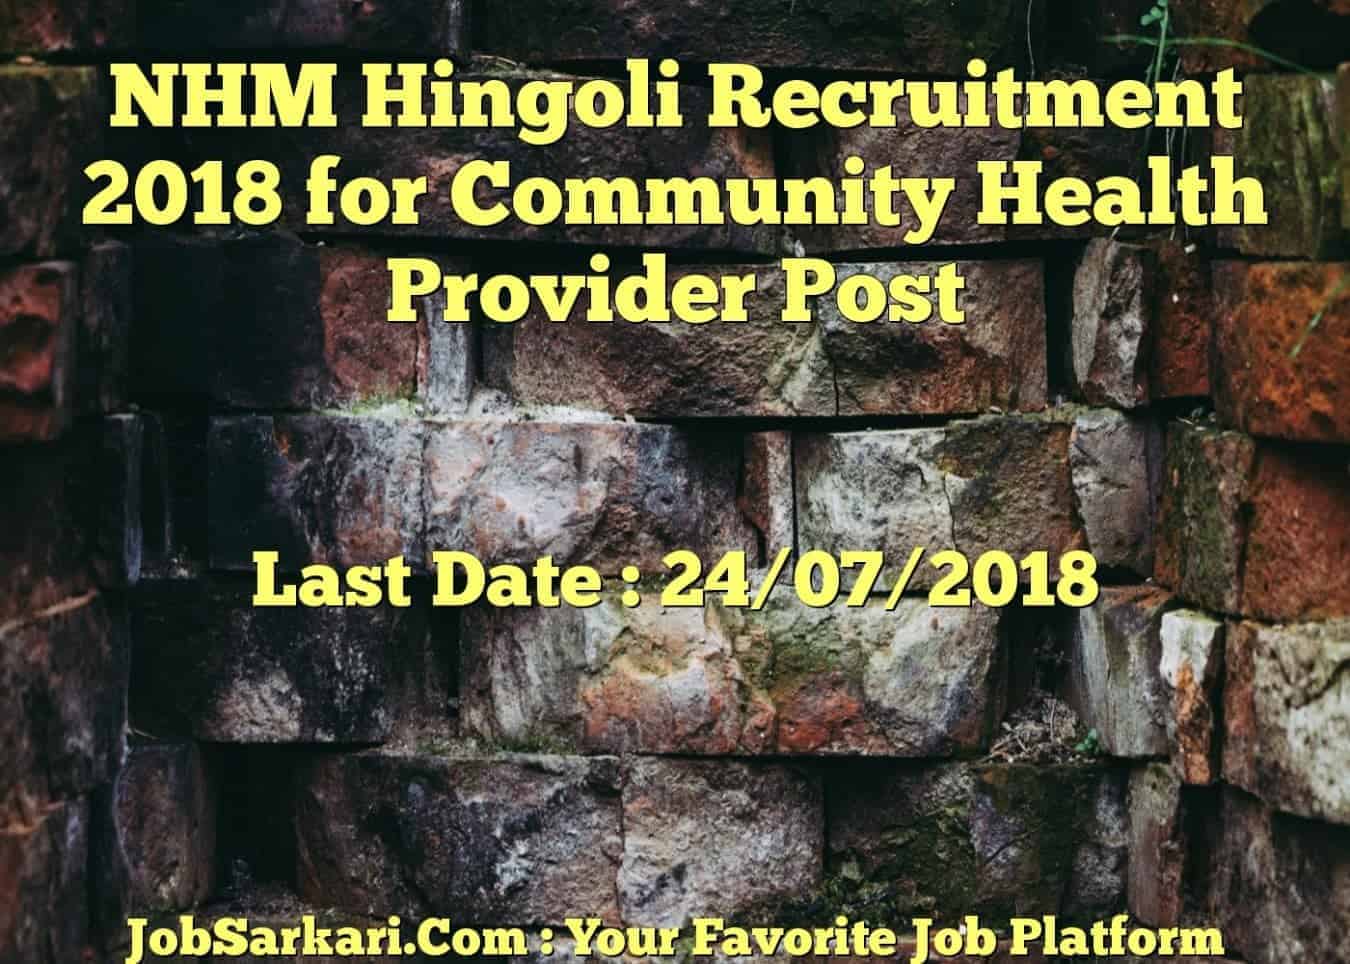 NHM Hingoli Recruitment 2018 for Community Health Provider Post